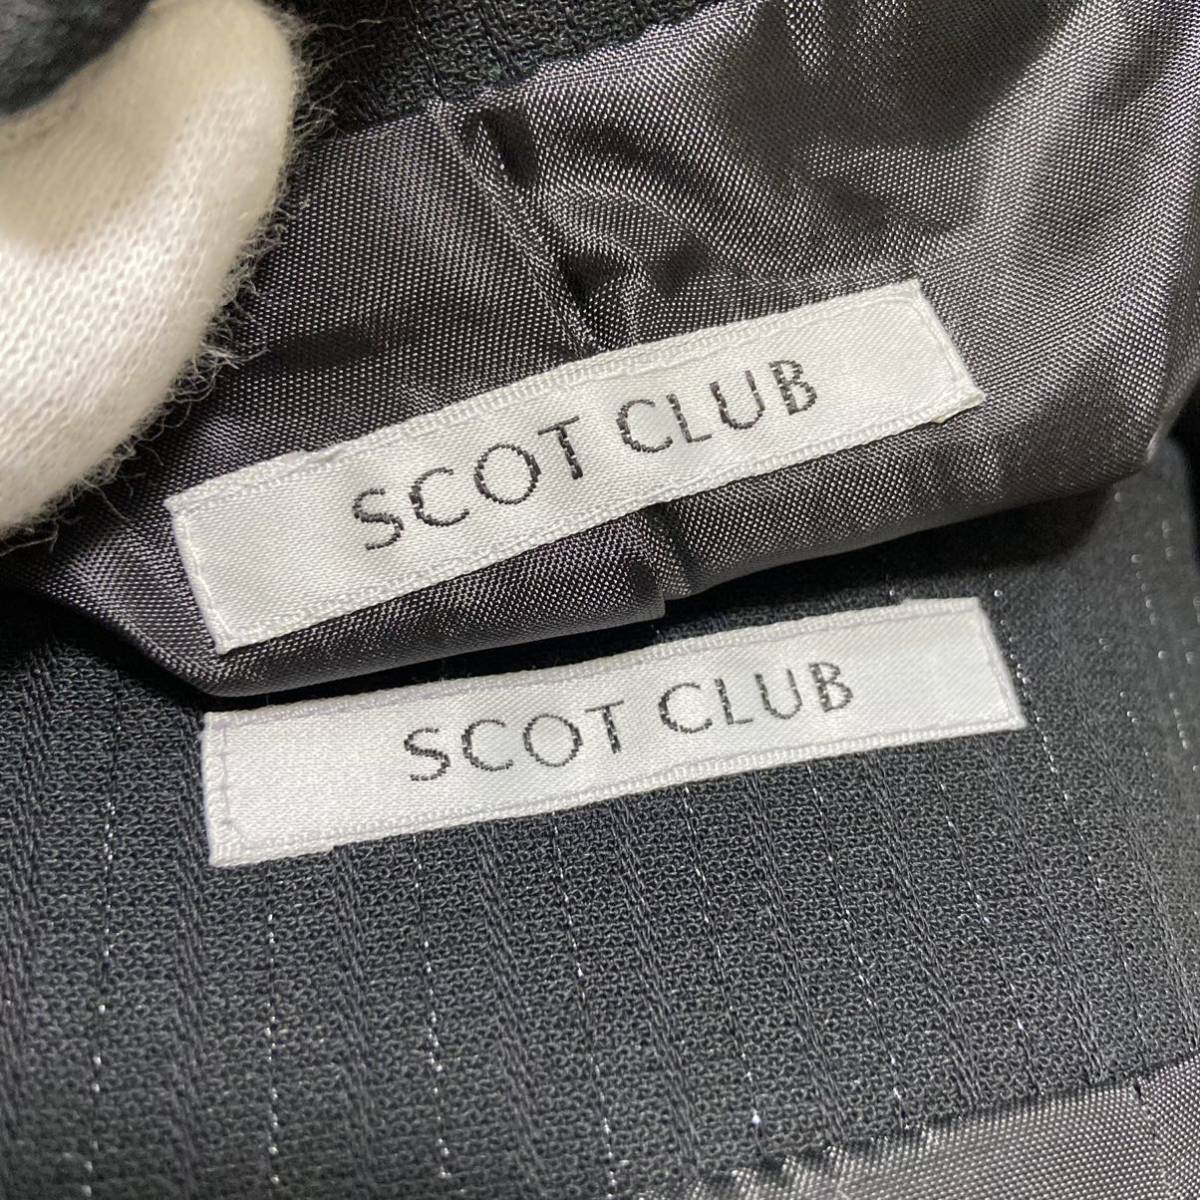 SCOT CLUB new goods jacket & skirt top and bottom setup 